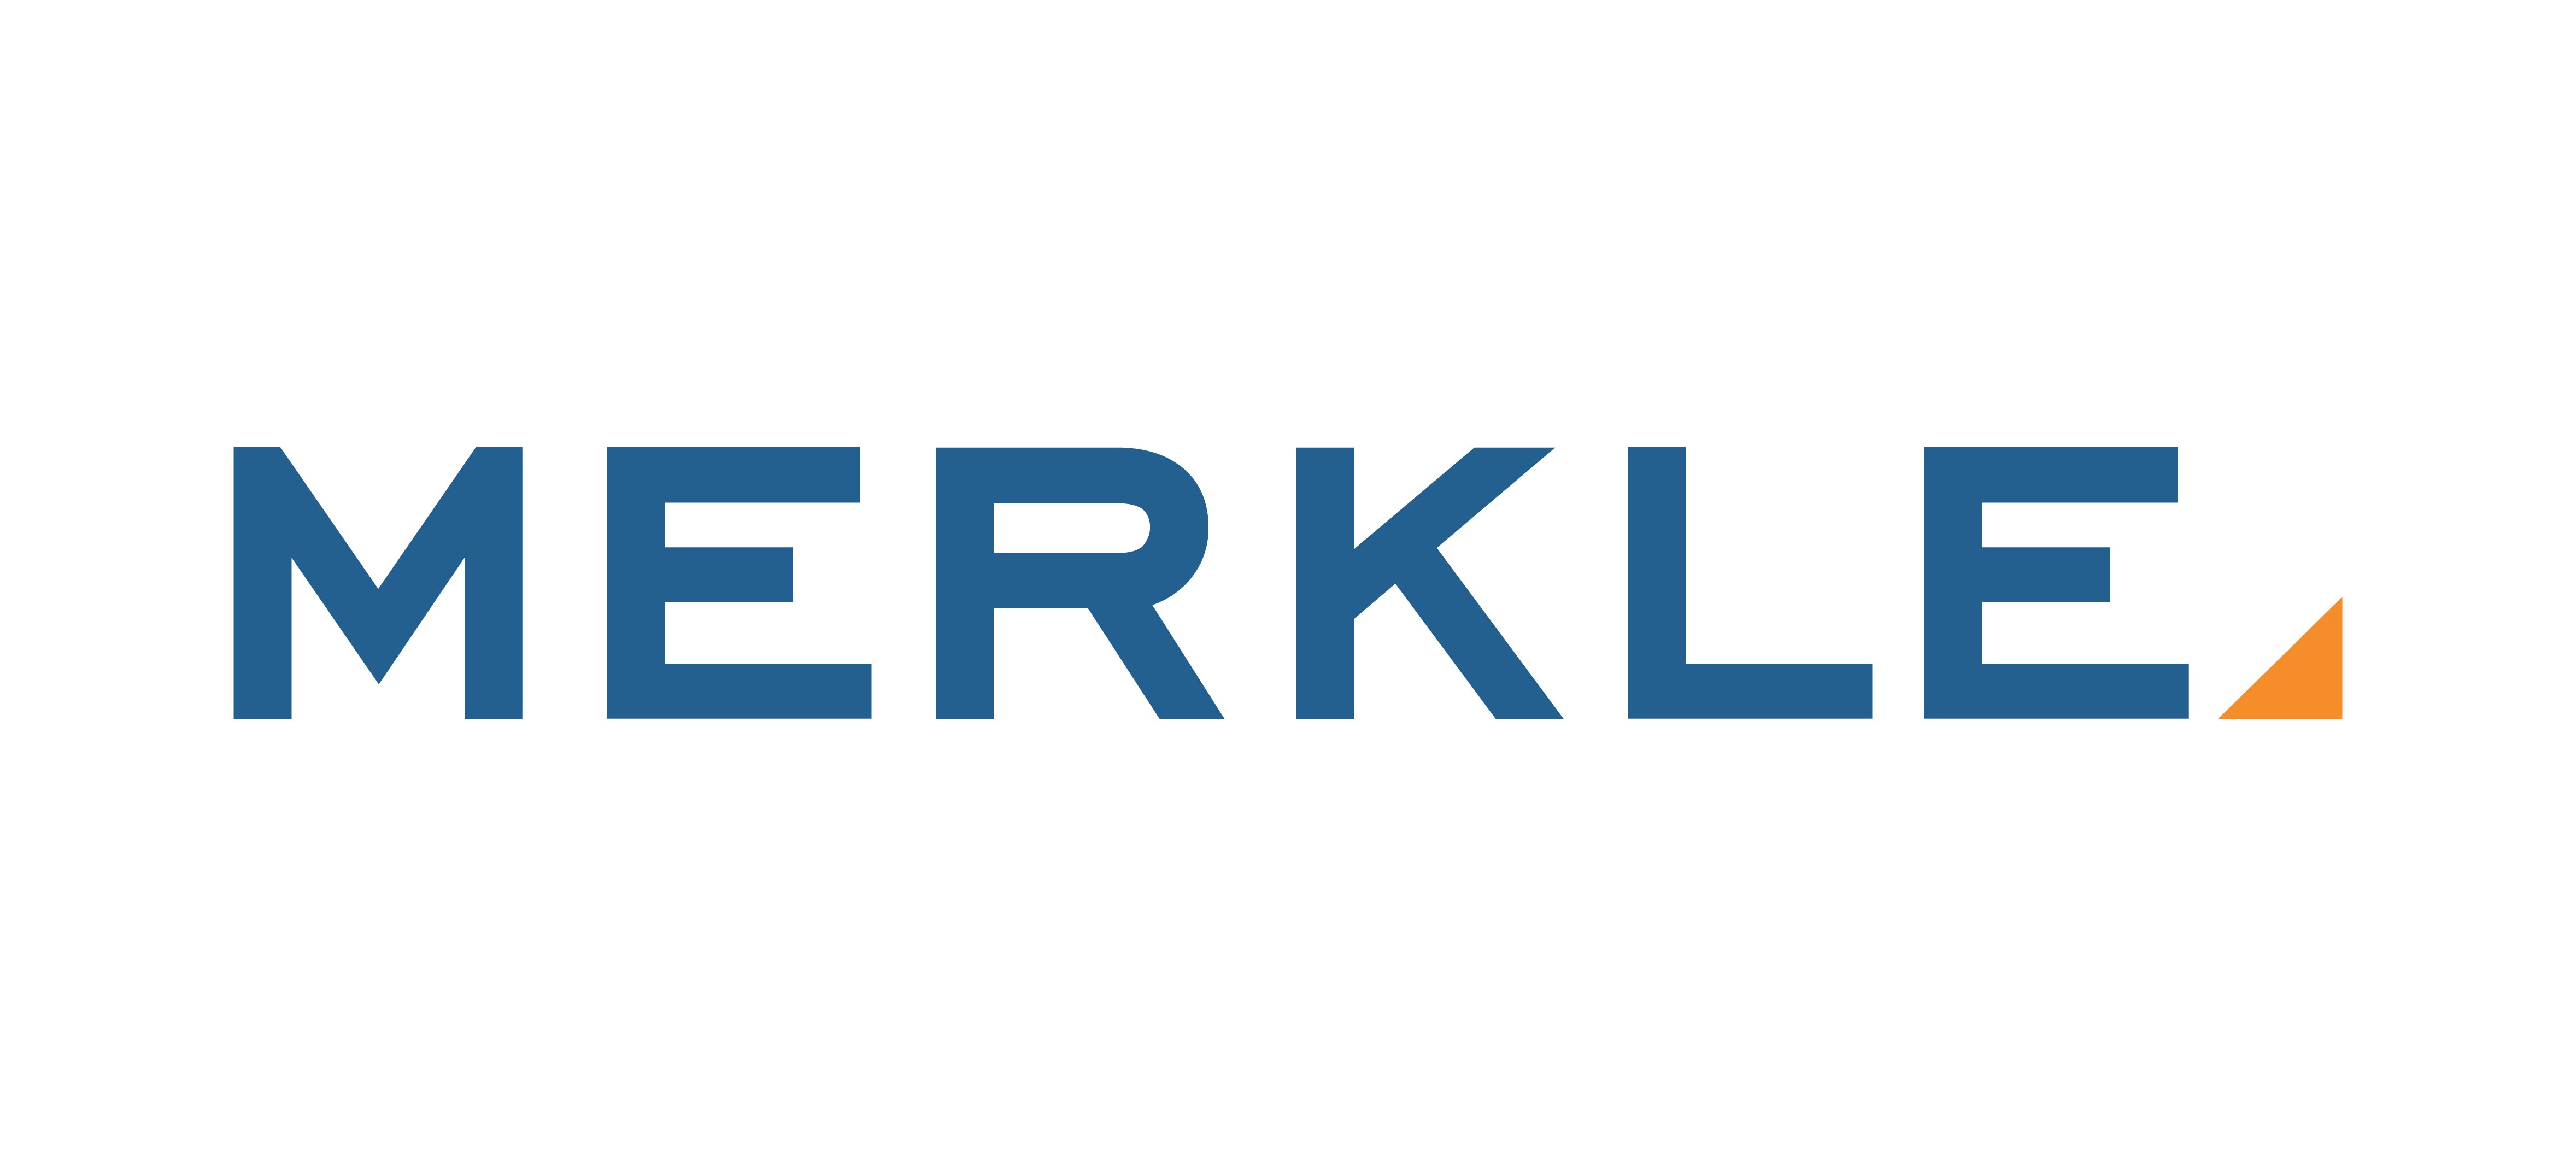 Merkle Logo - Merkle Inc.